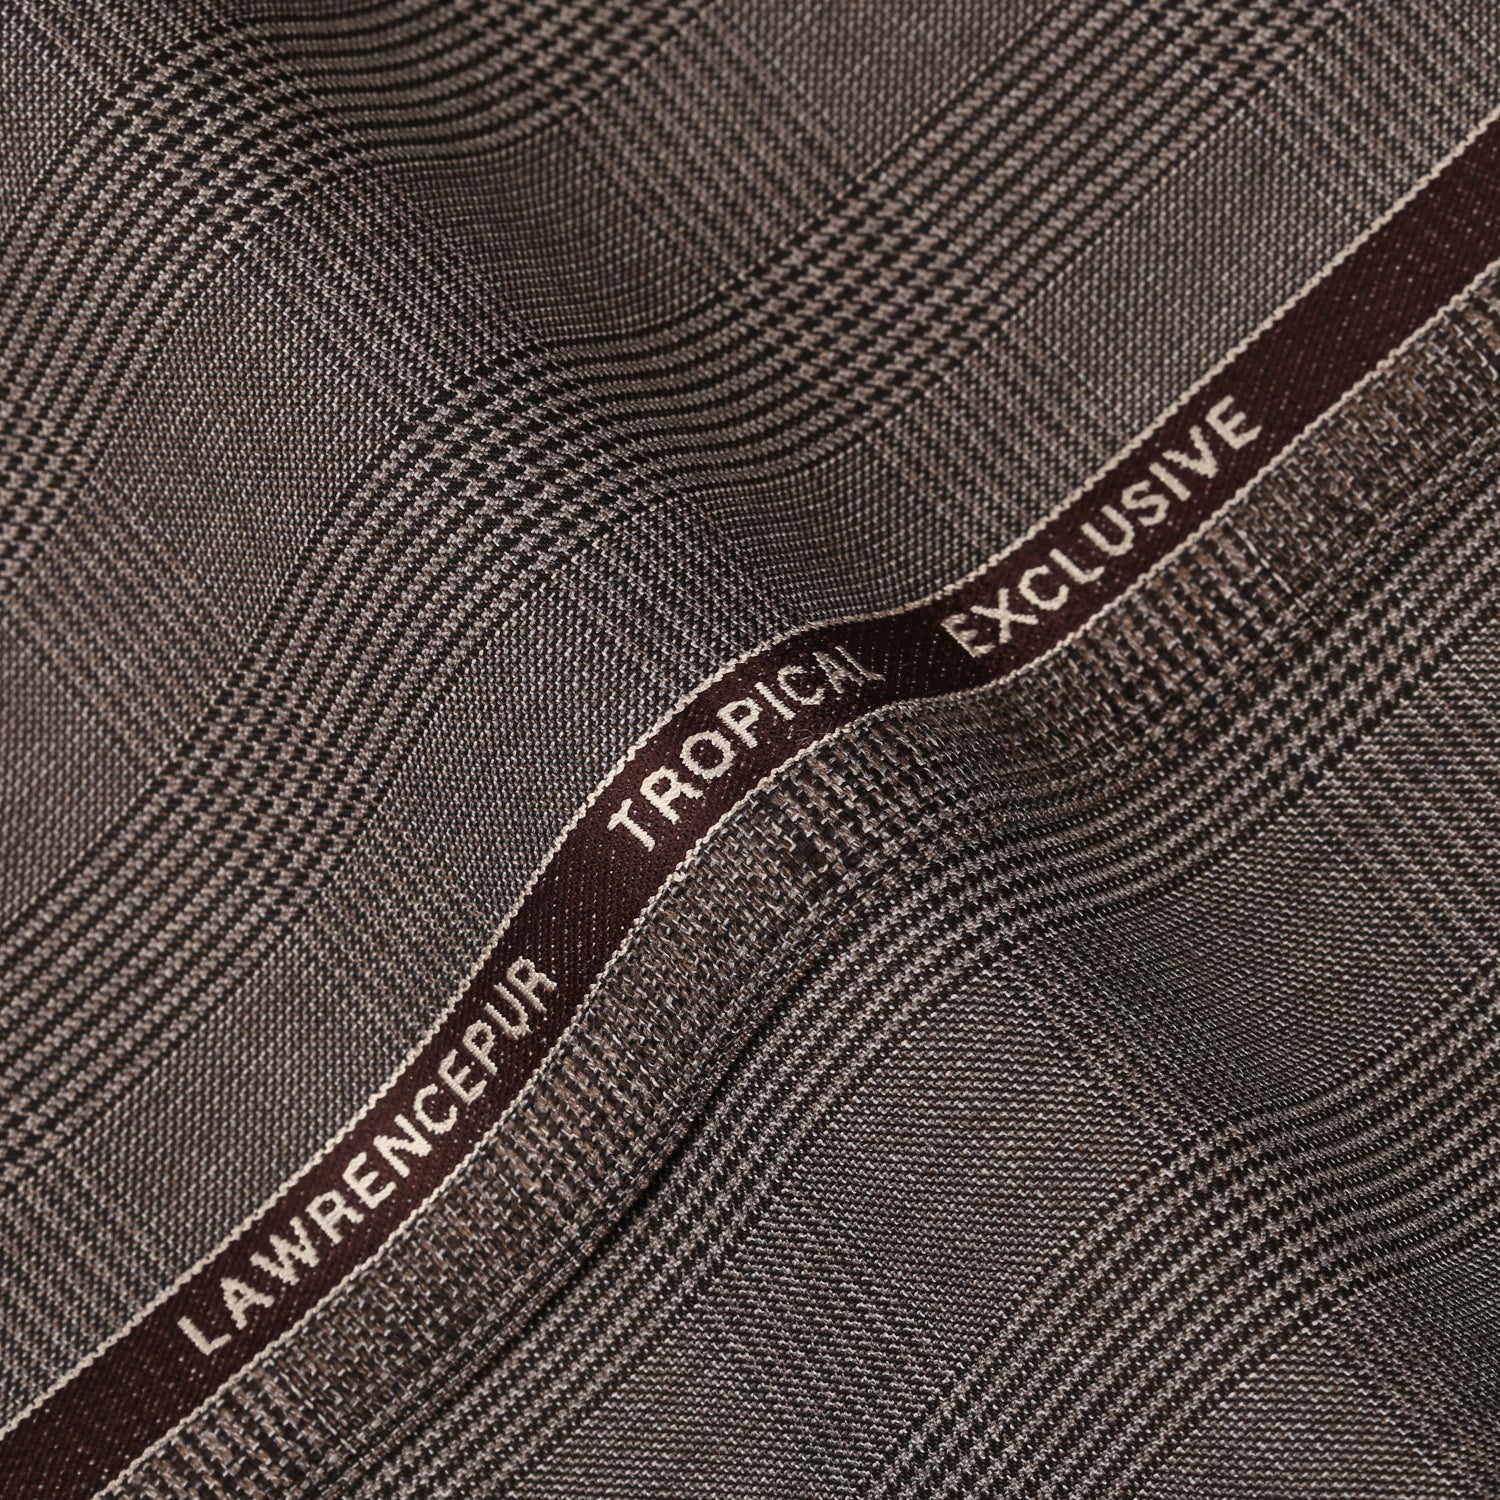 Glen Plaid Checks-Mocha Brown, Wool Blend, Tropical Exclusive Suiting Fabric